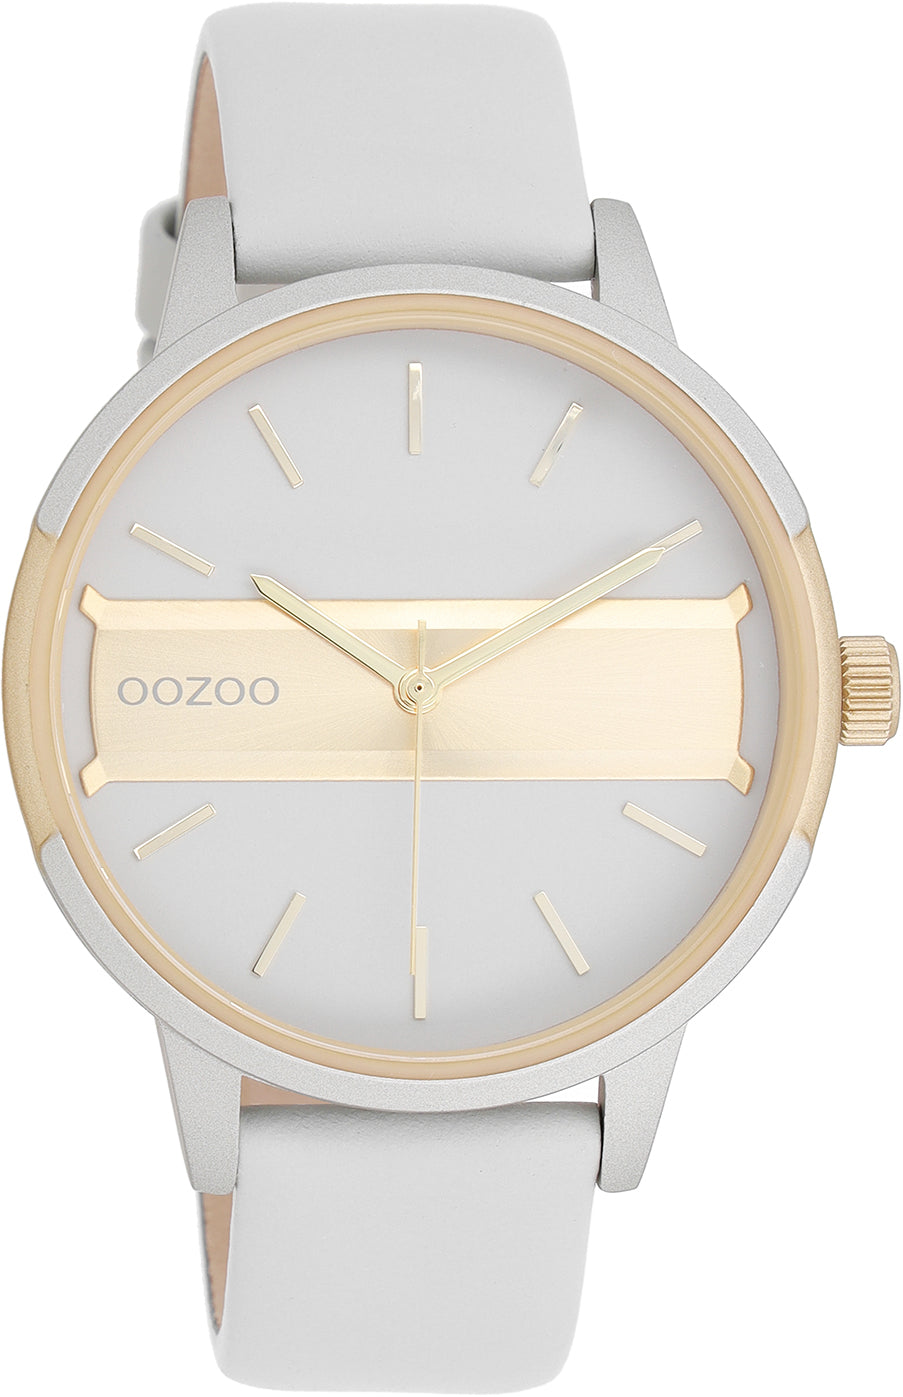 OOZOO Timepieces - C11152 - Damen - Leder-Armband - Hellgrau Gold